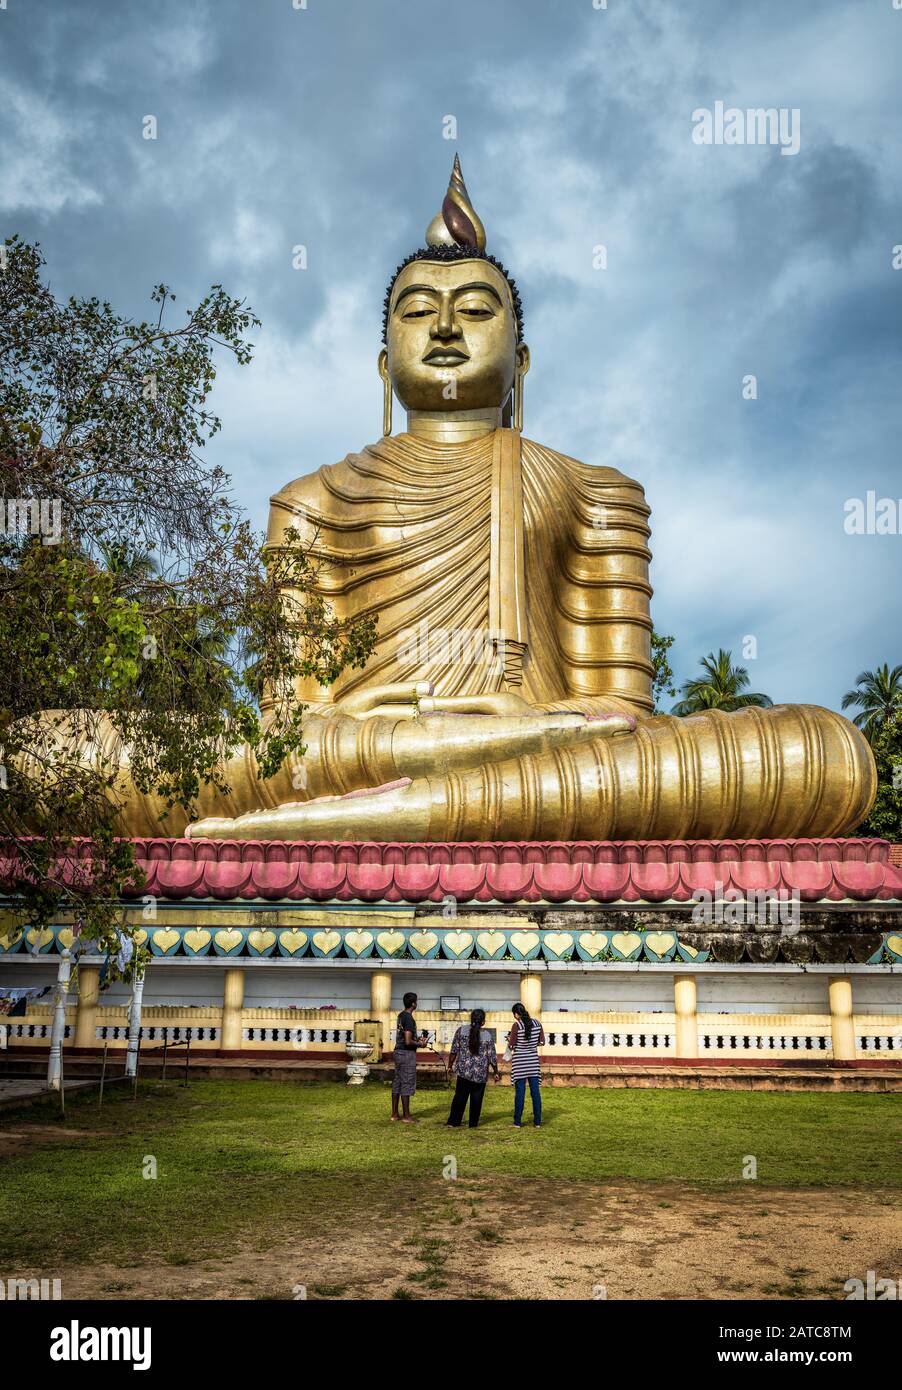 Dickwella, Sri Lanka - November 4, 2017: Big Buddha in the Wewurukannala Vihara old temple. A 50m-high seated Buddha statue is the largest in Sri Lank Stock Photo